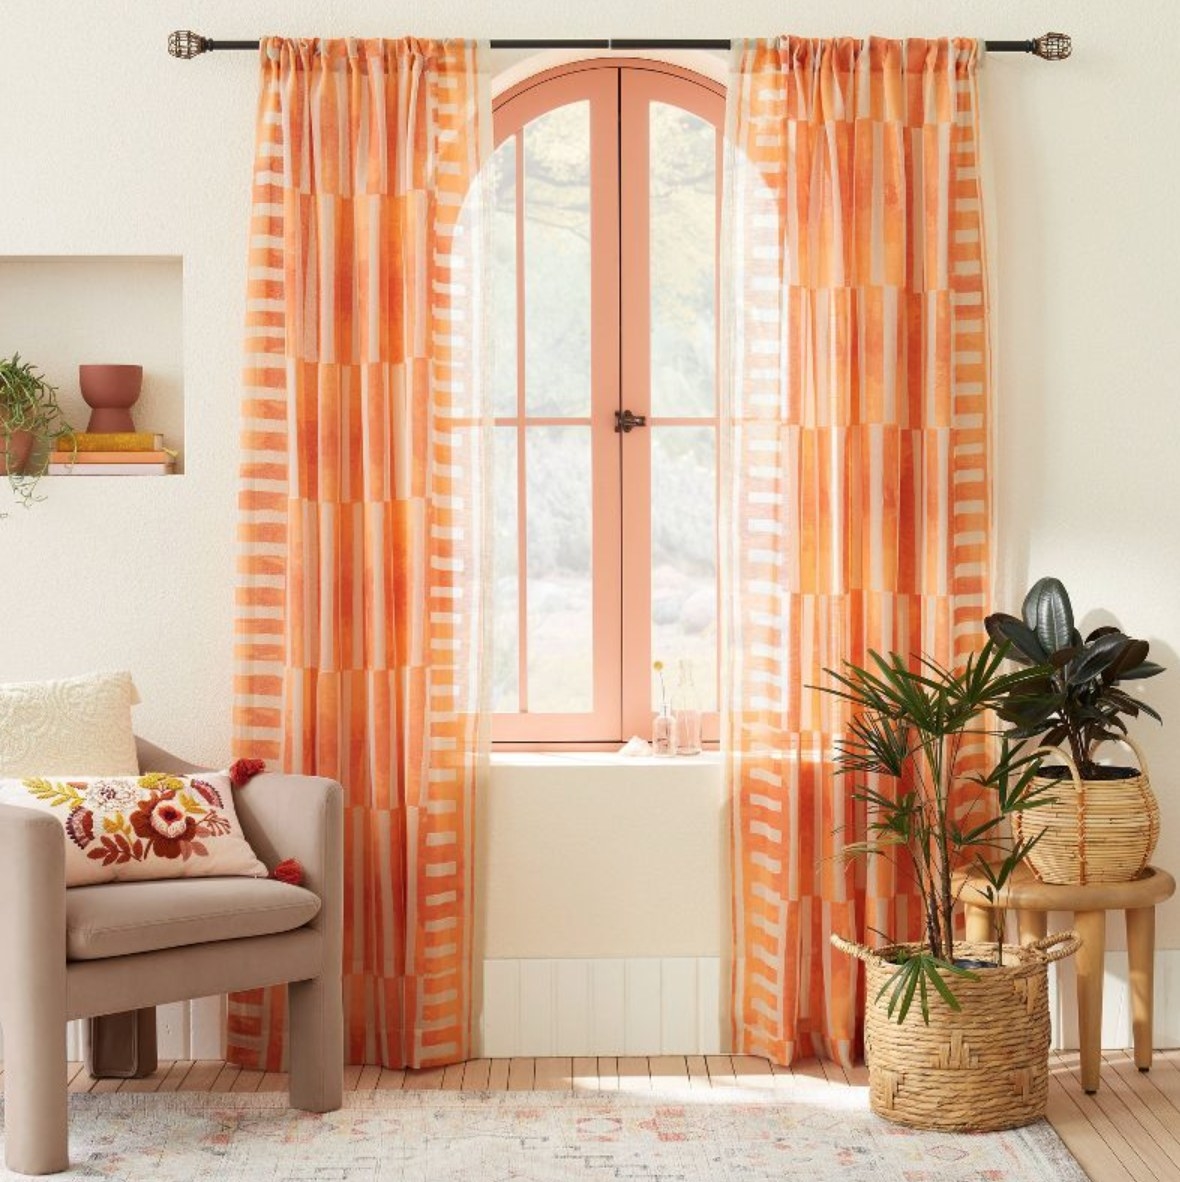 the multi-striped orange curtains